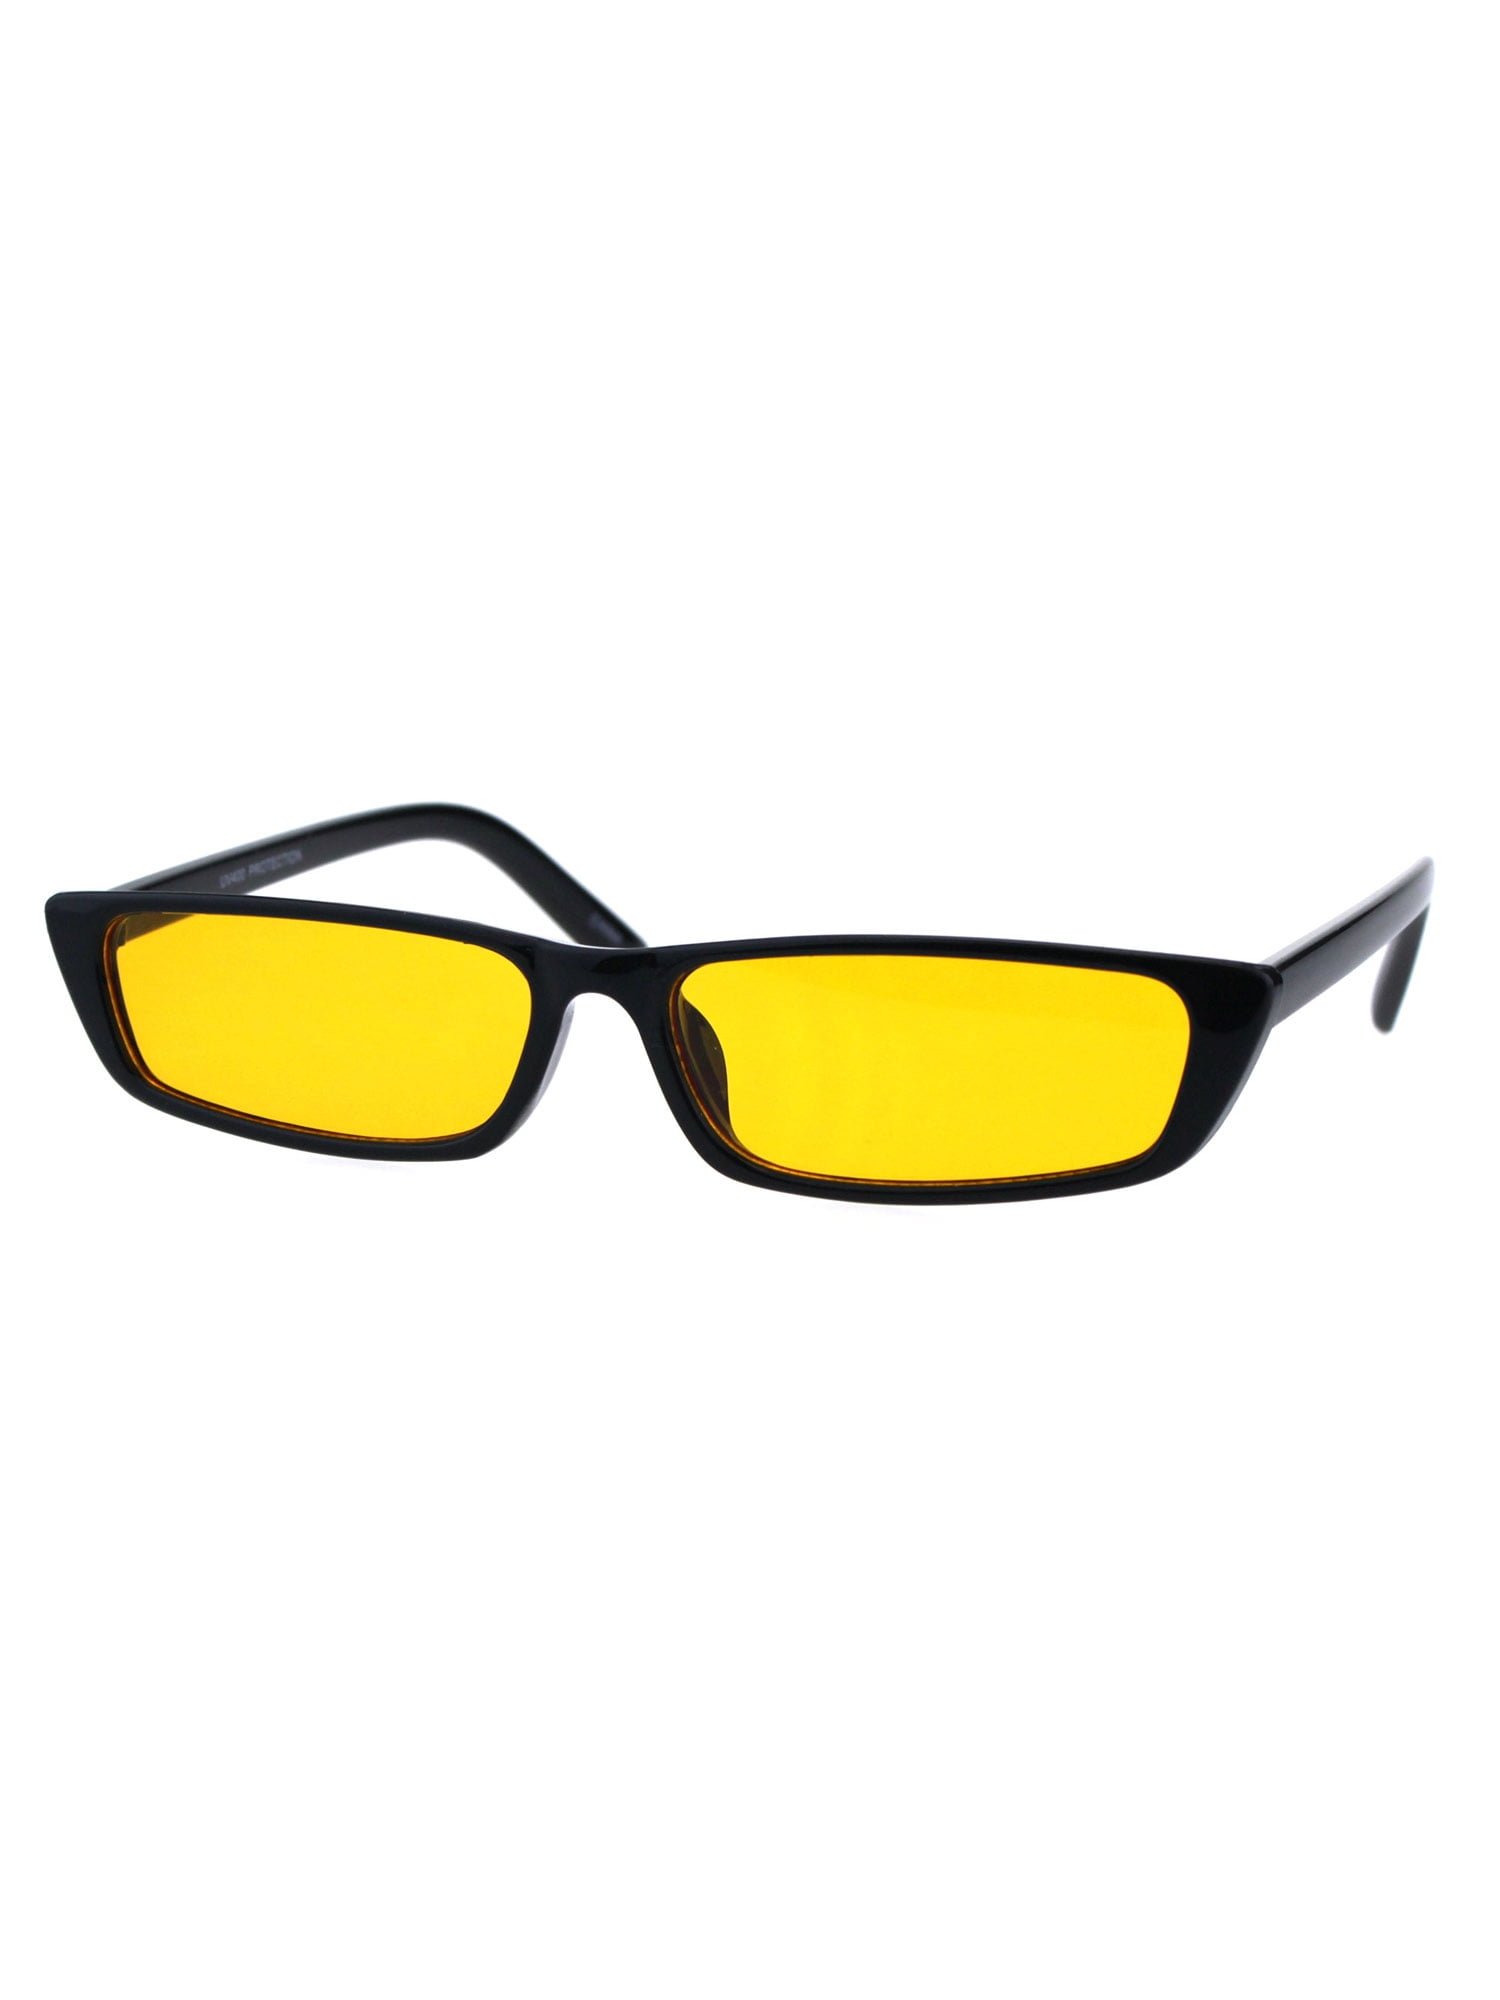 Womens Pop Color Lens Narrow Rectangular Cat Eye Black Plastic Sunglasses Black Yellow